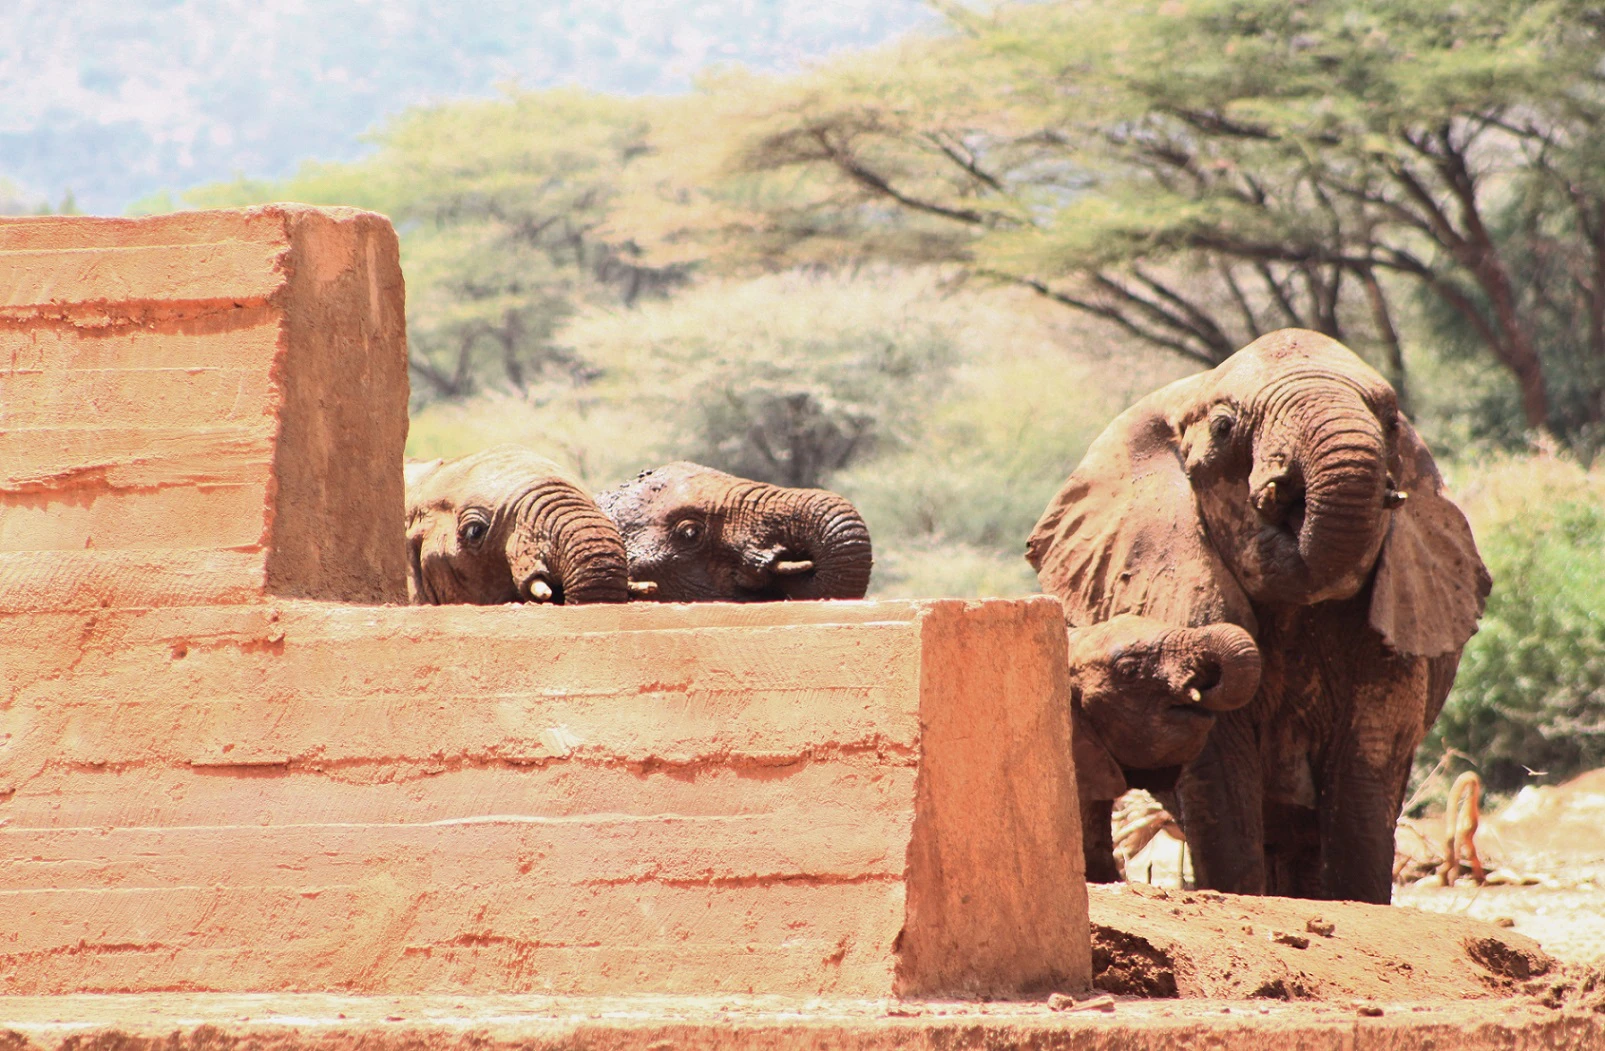 Elephants using a sand dam in Kenya's northern rangelands region